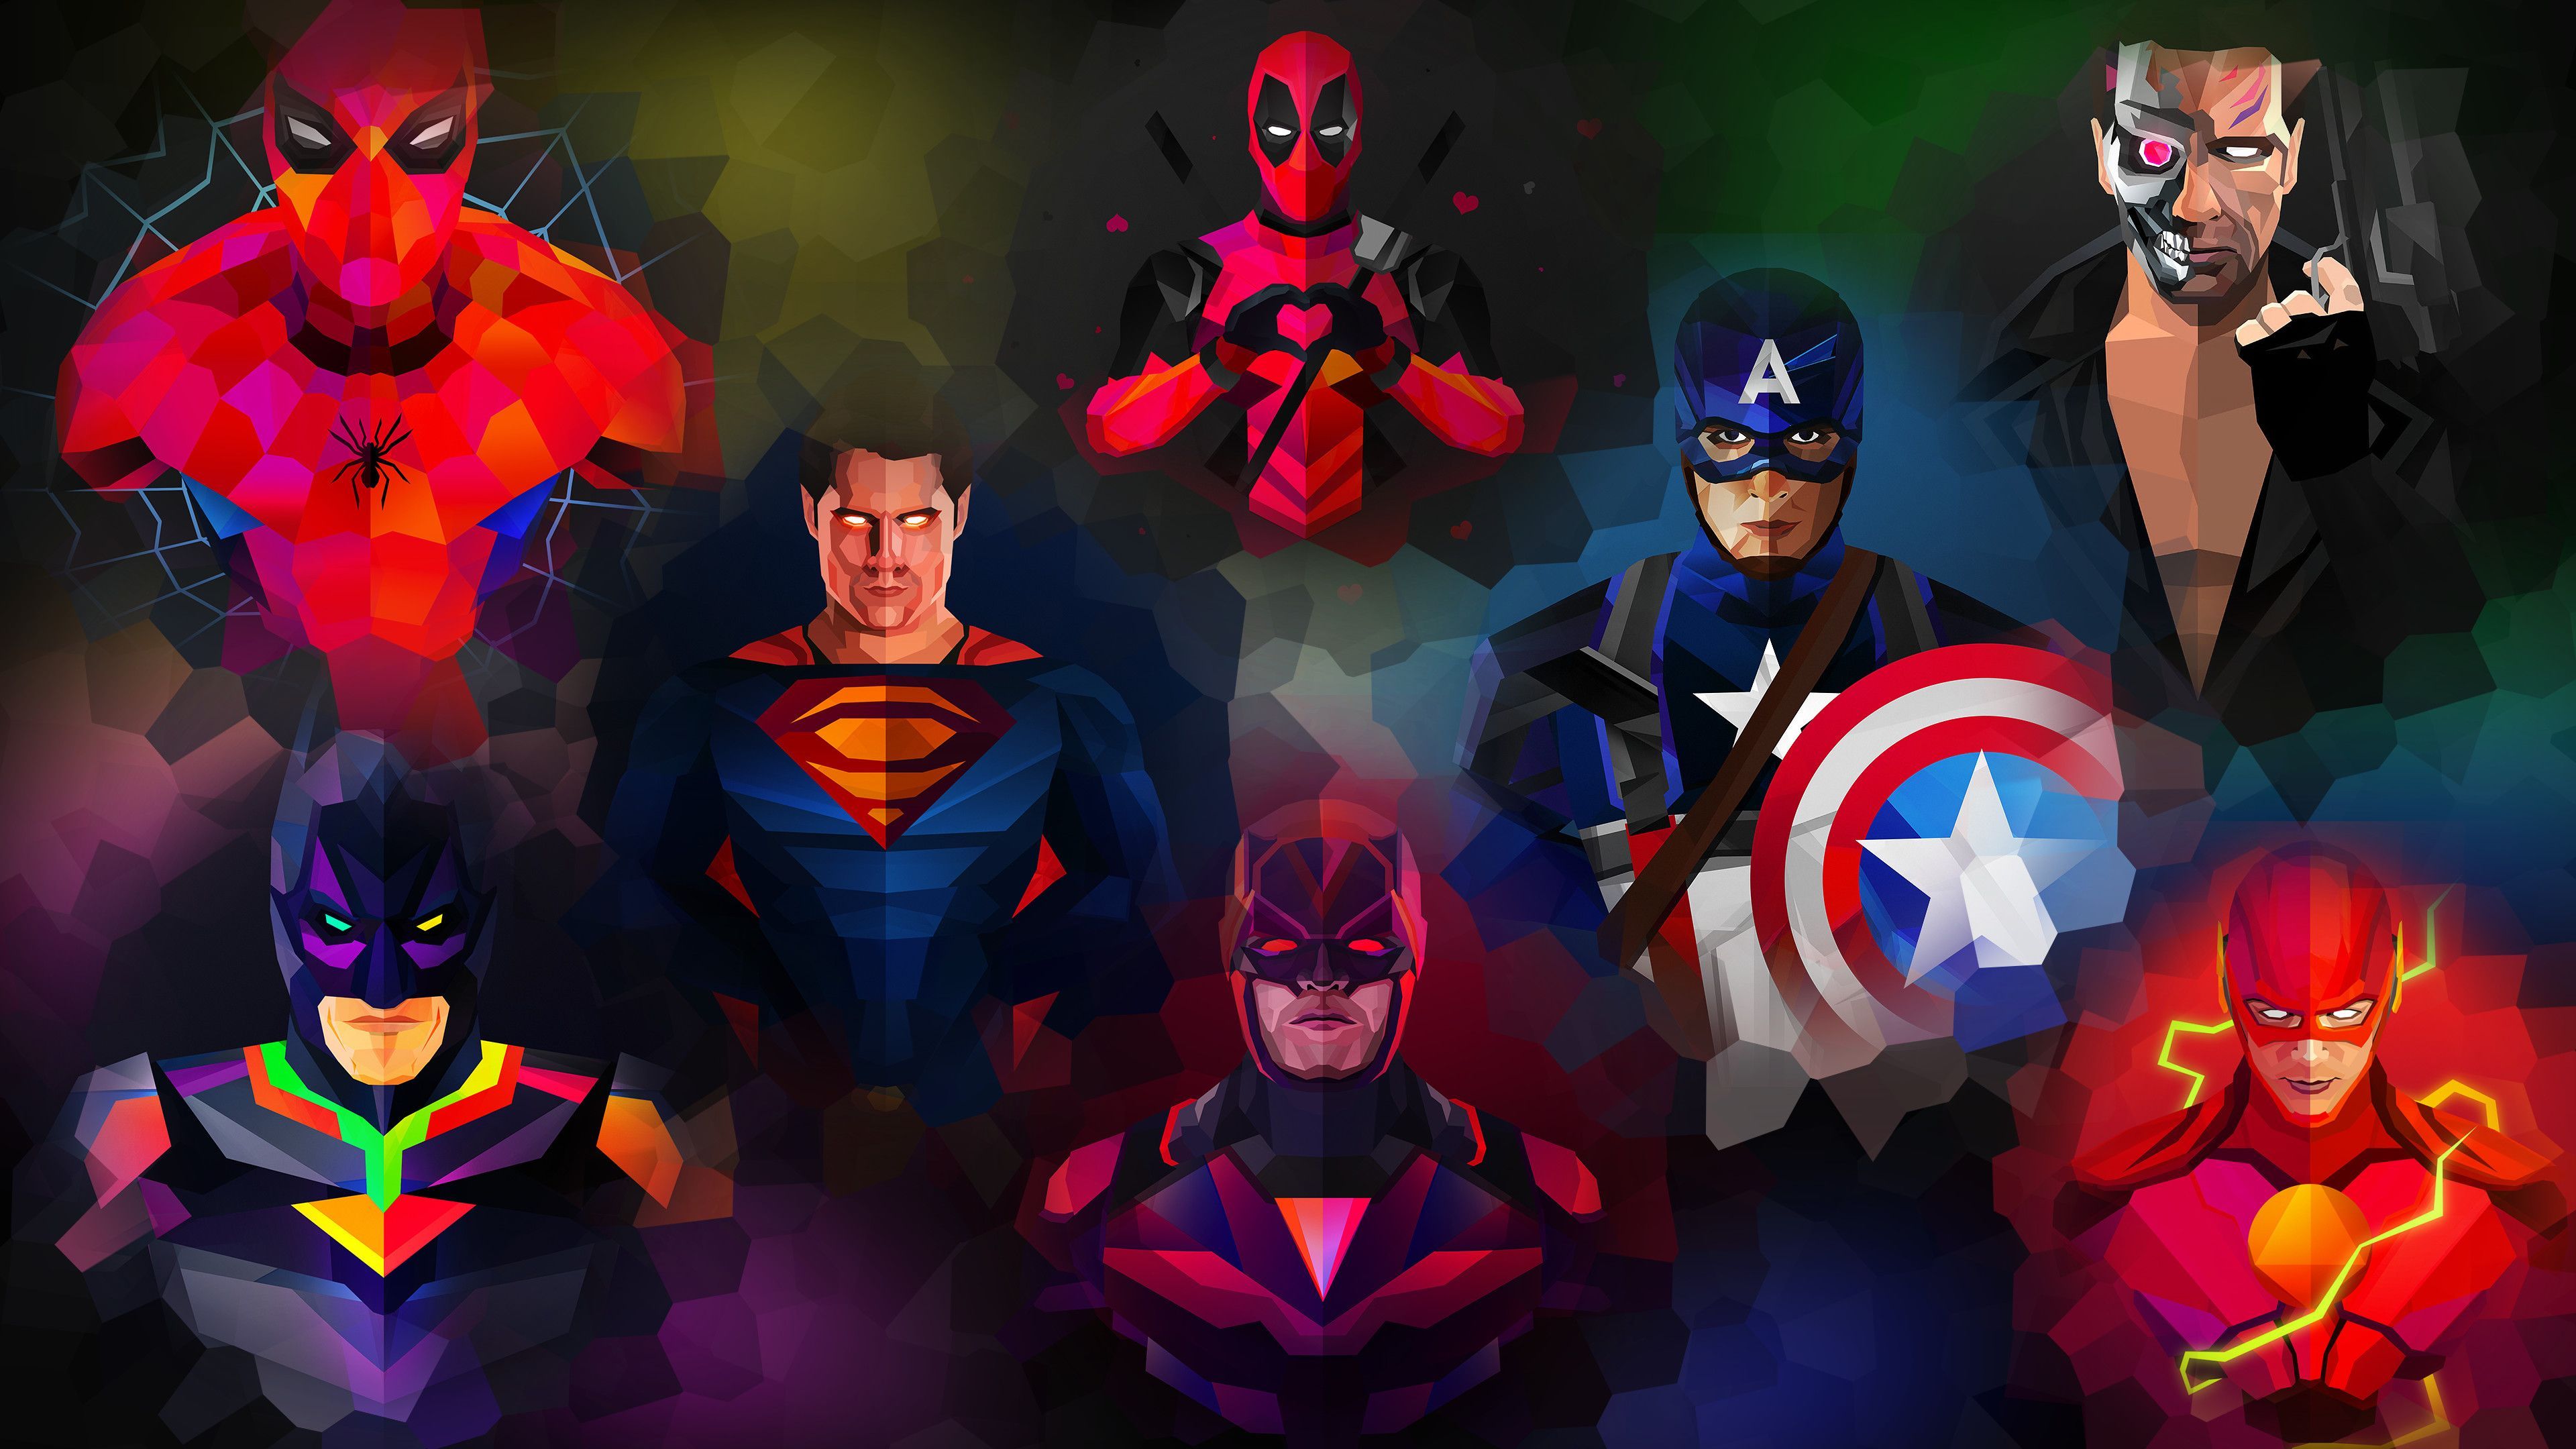 superhero 4k wallpaper. Superhero wallpaper, Marvel comics wallpaper, Avengers wallpaper